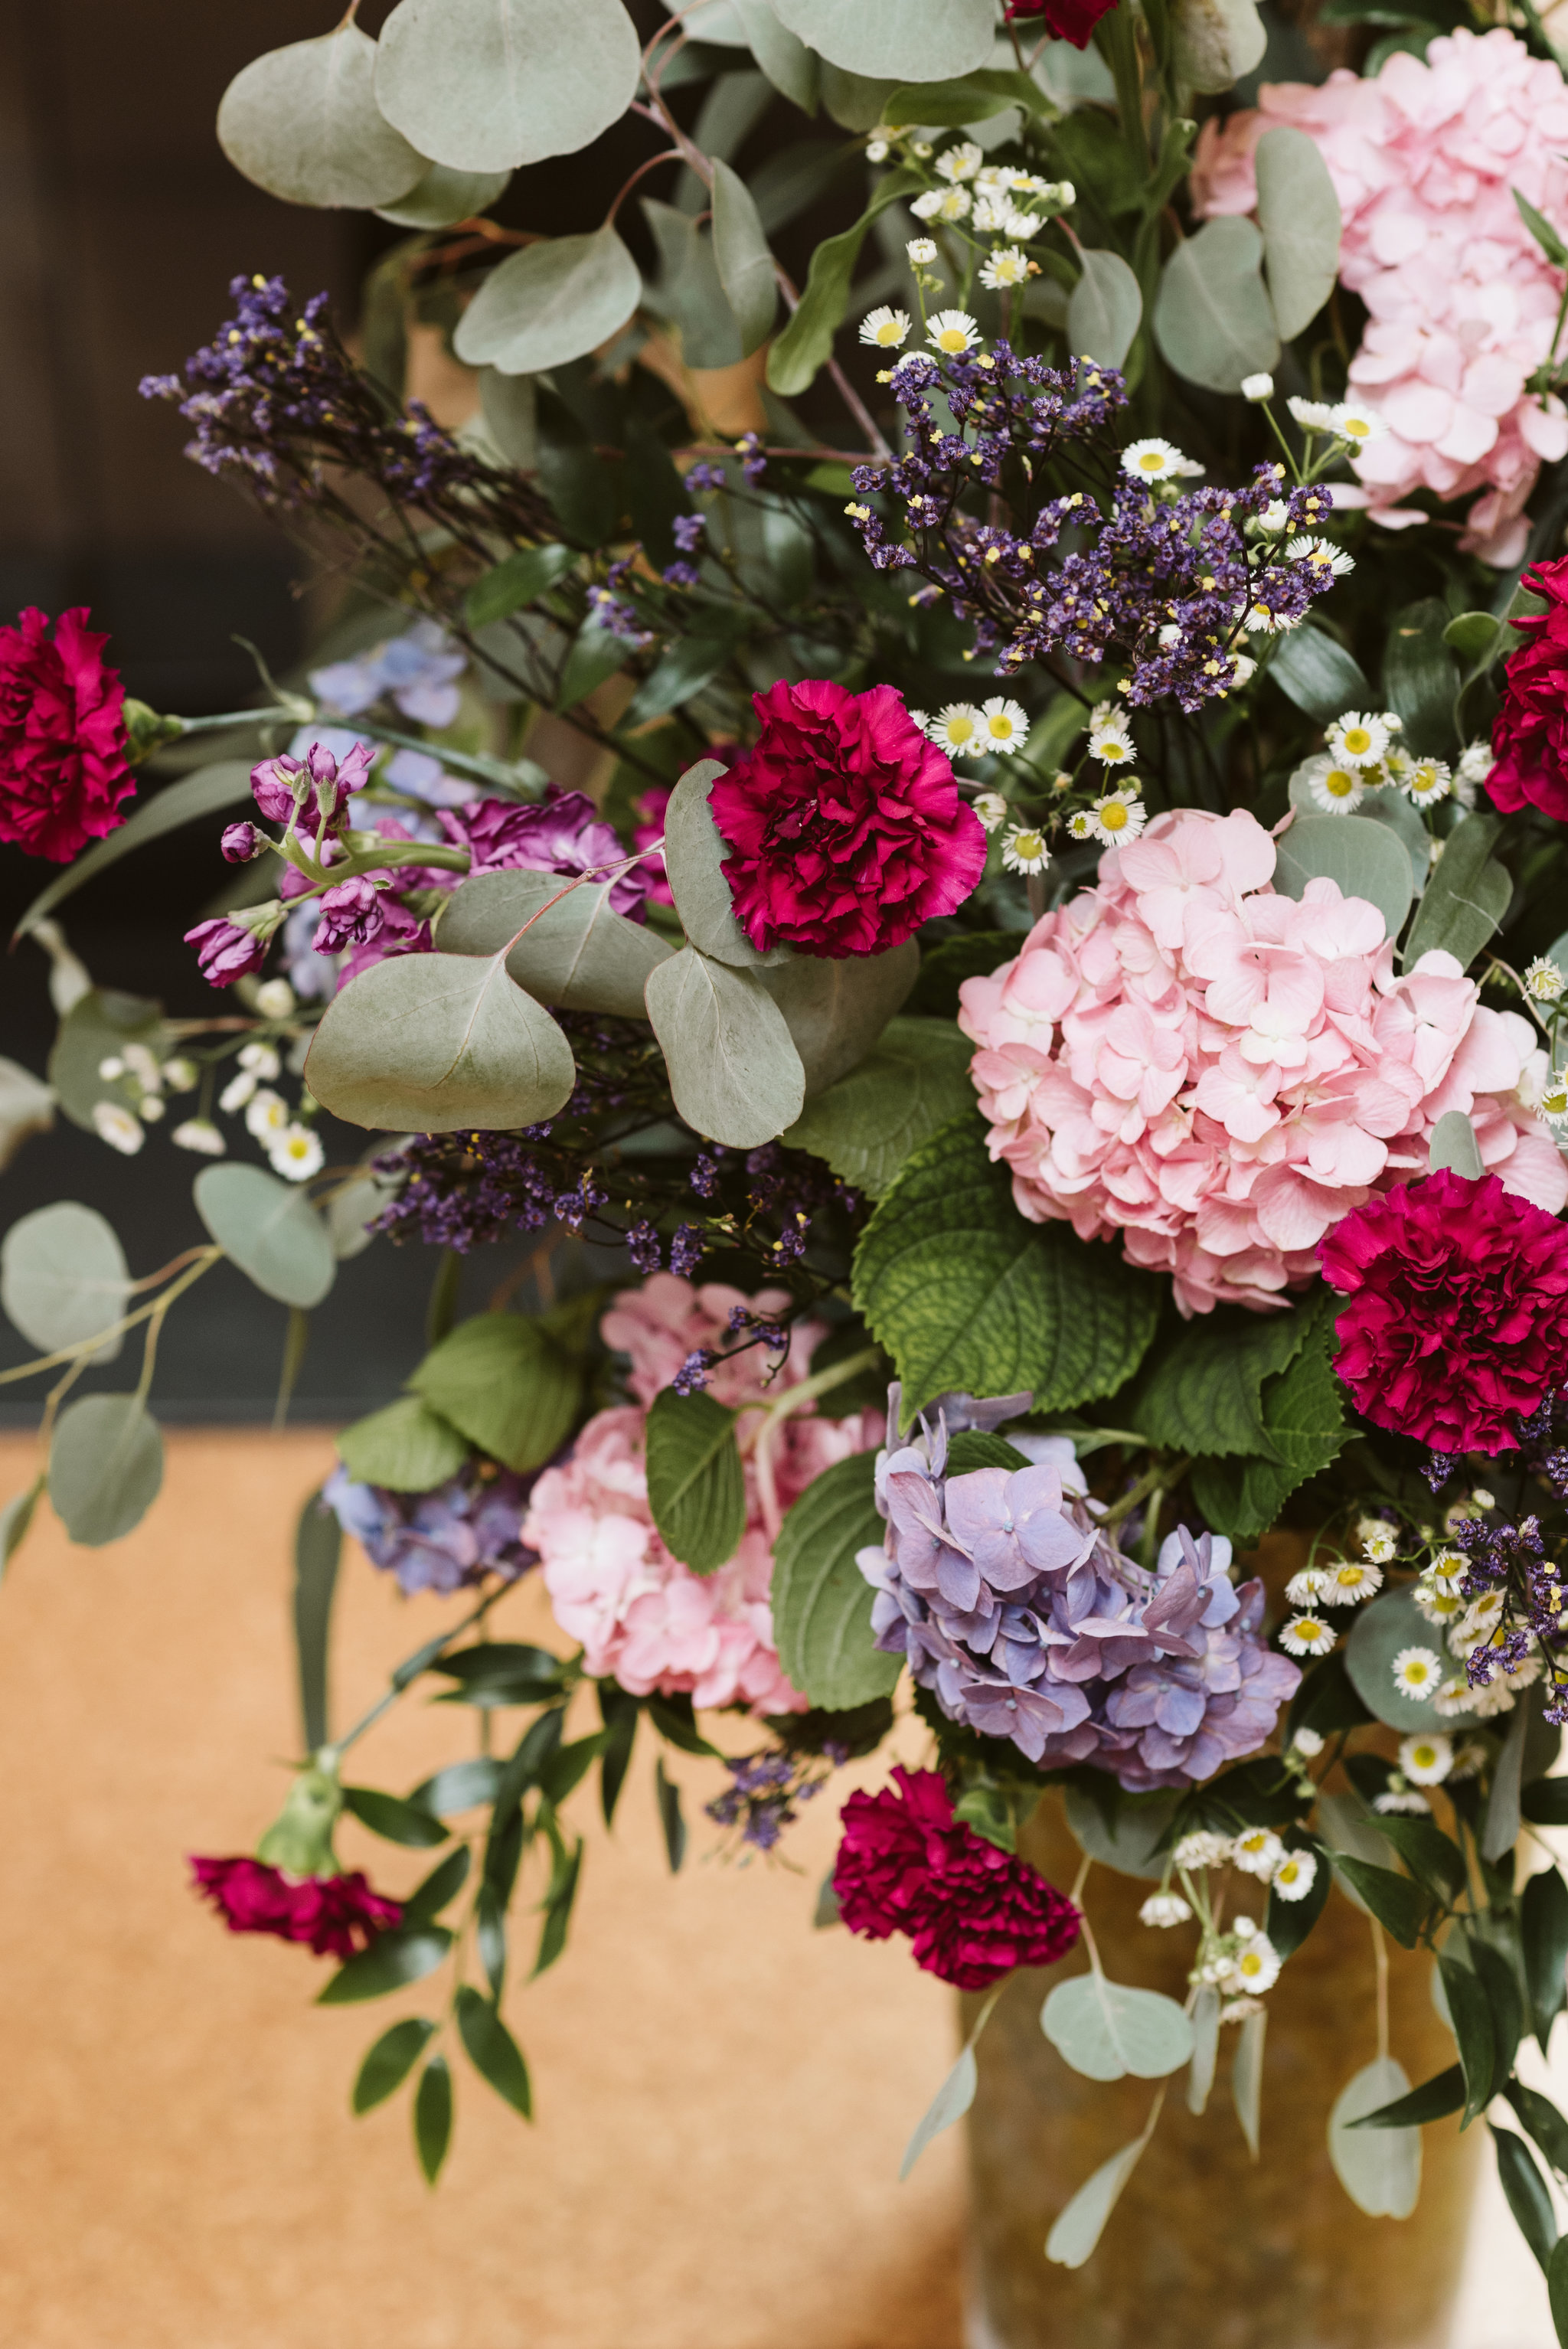  Annapolis, Quaker Wedding, Maryland Wedding Photographer, Intimate, Small Wedding, Vintage, DIY, Closeup of Wedding Flowers, Pink and White Flowers, Hydrangea  